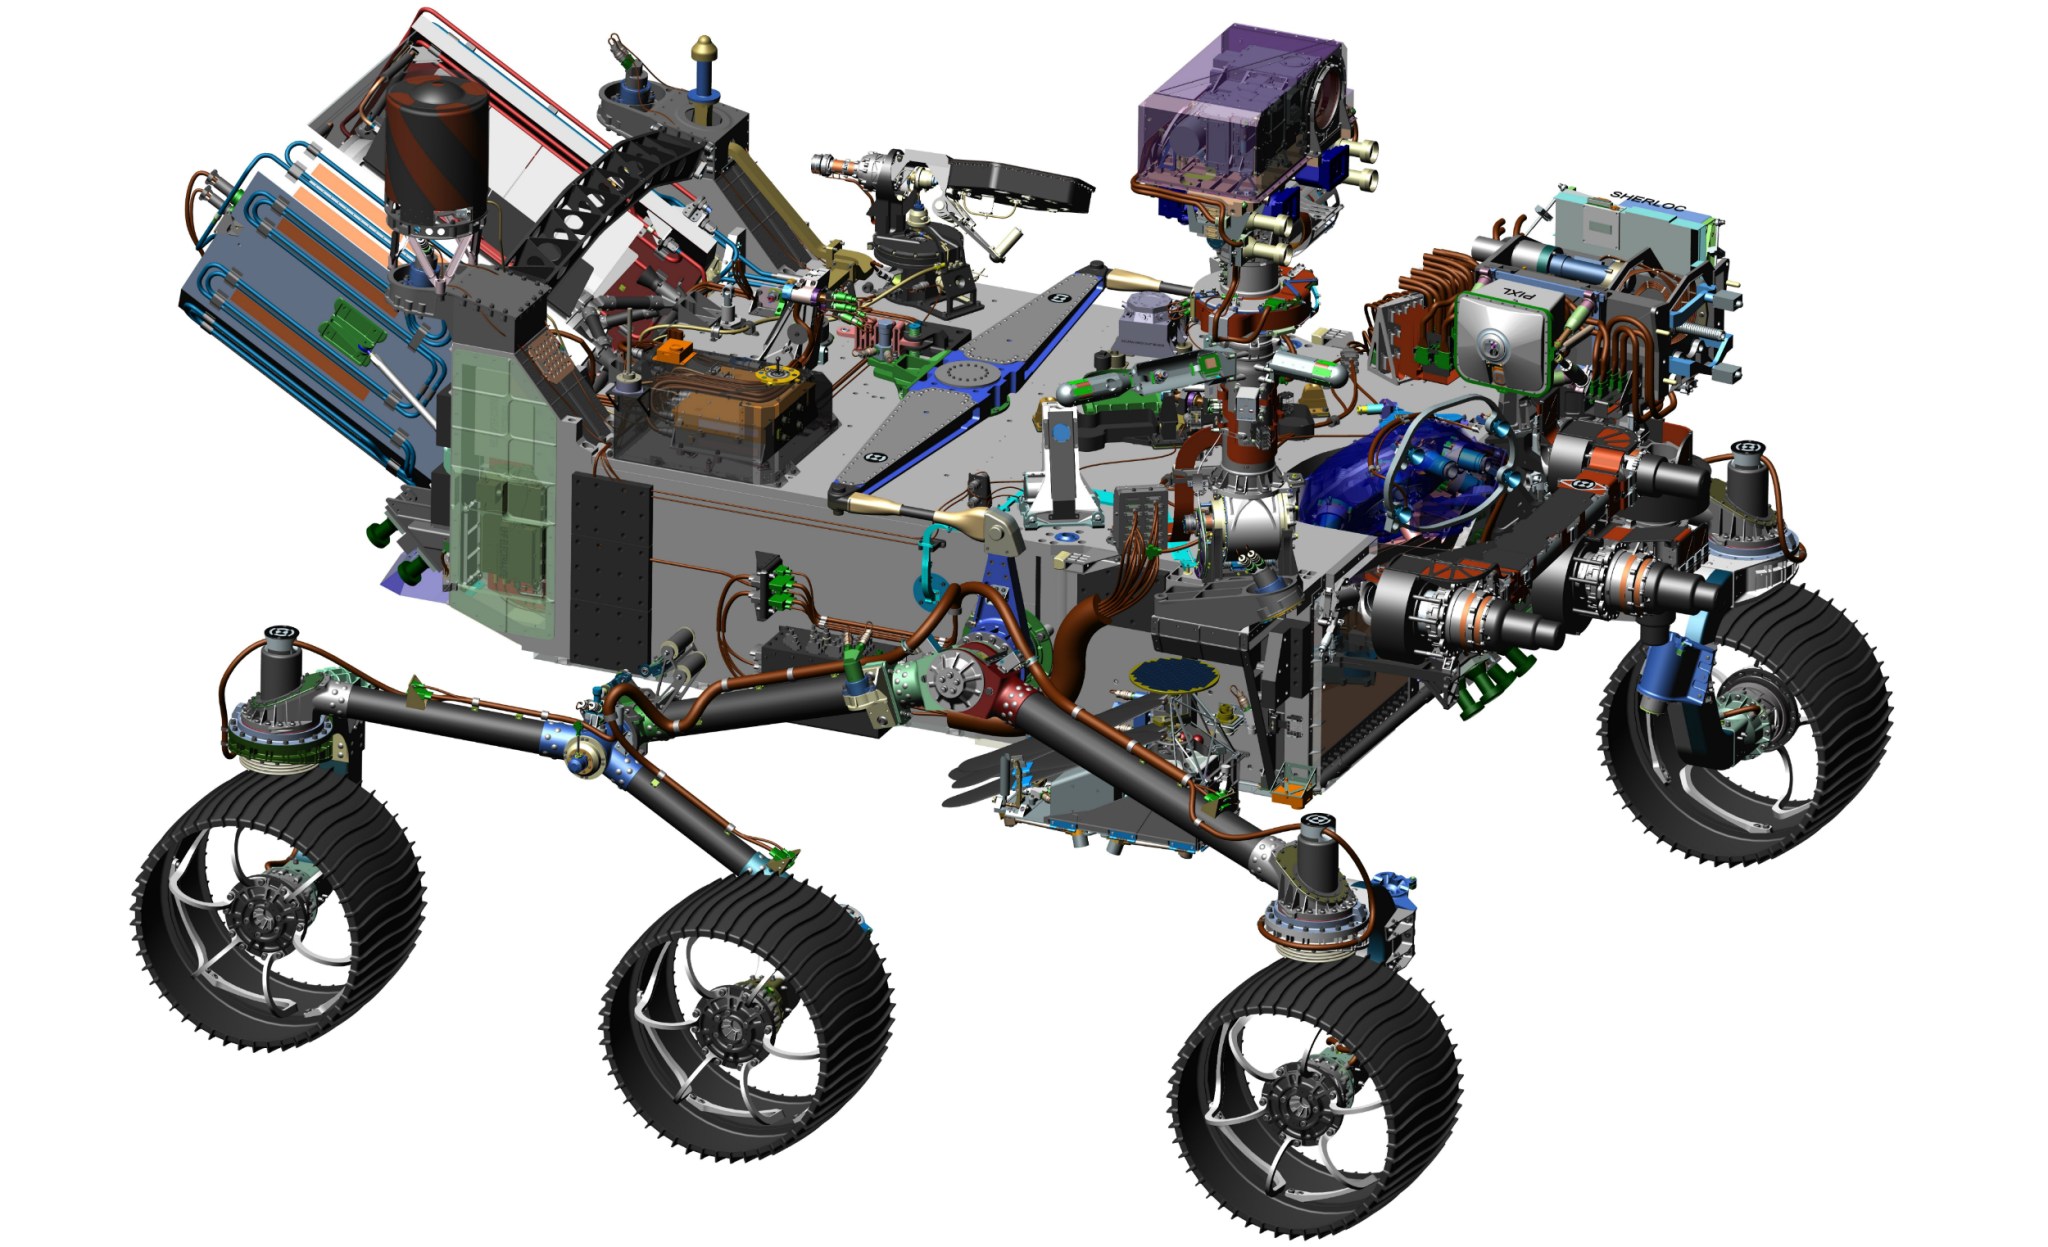 Mars 2020 rover design